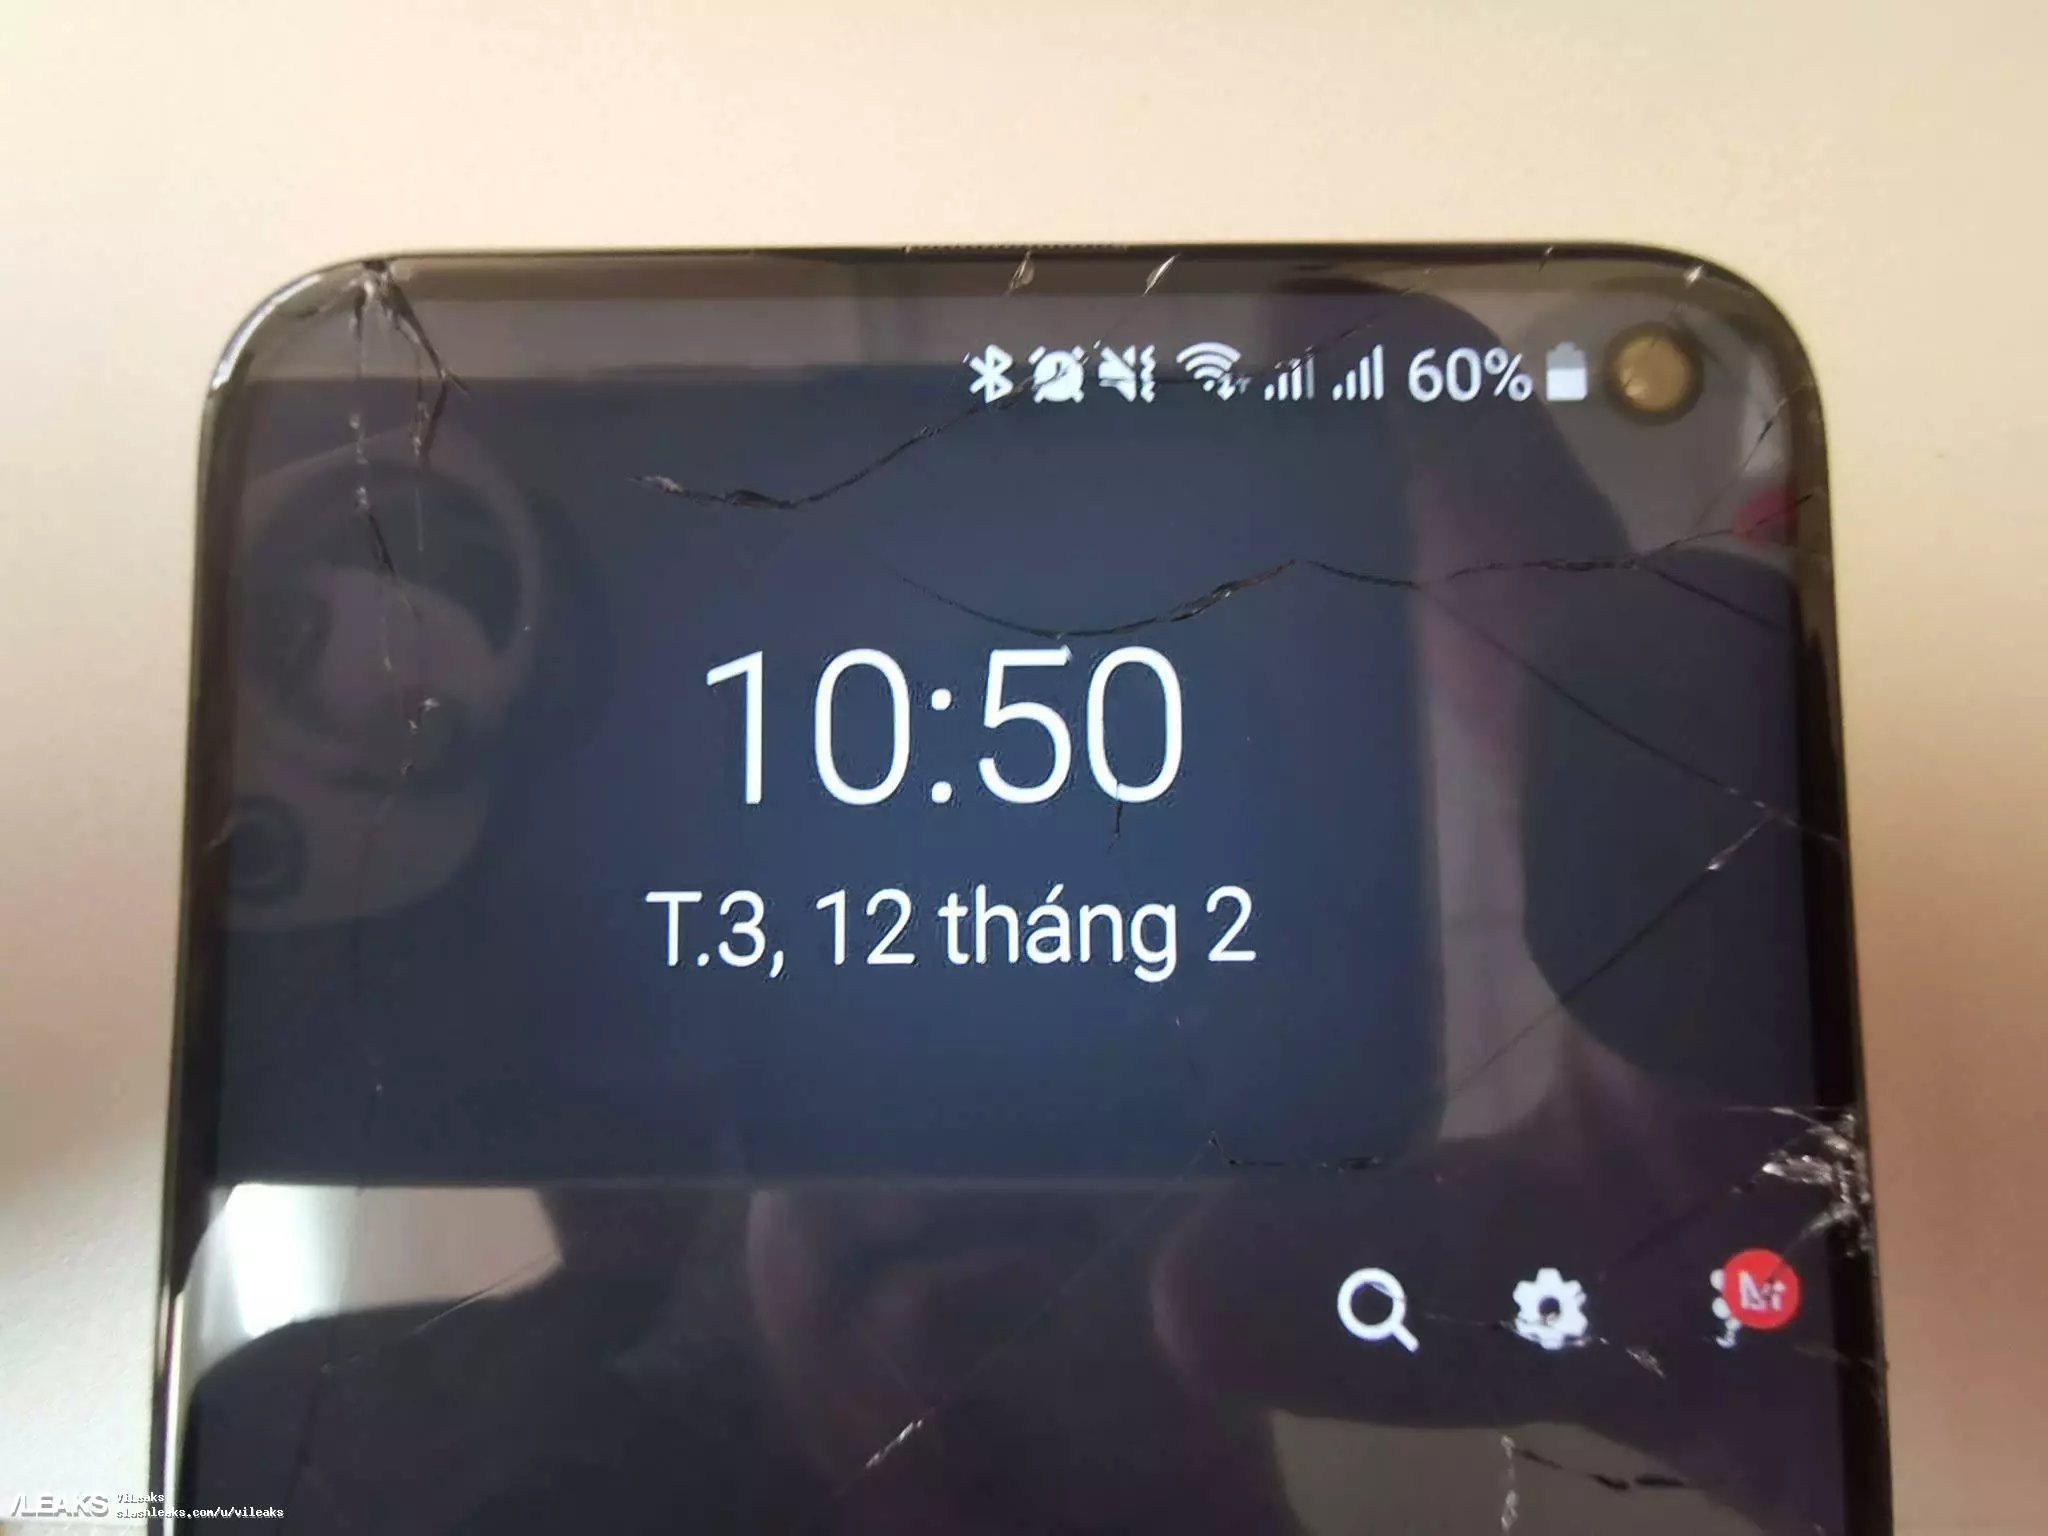 Разбитый Samsung Galaxy S10, который был подарен блогеру из Вьетнама